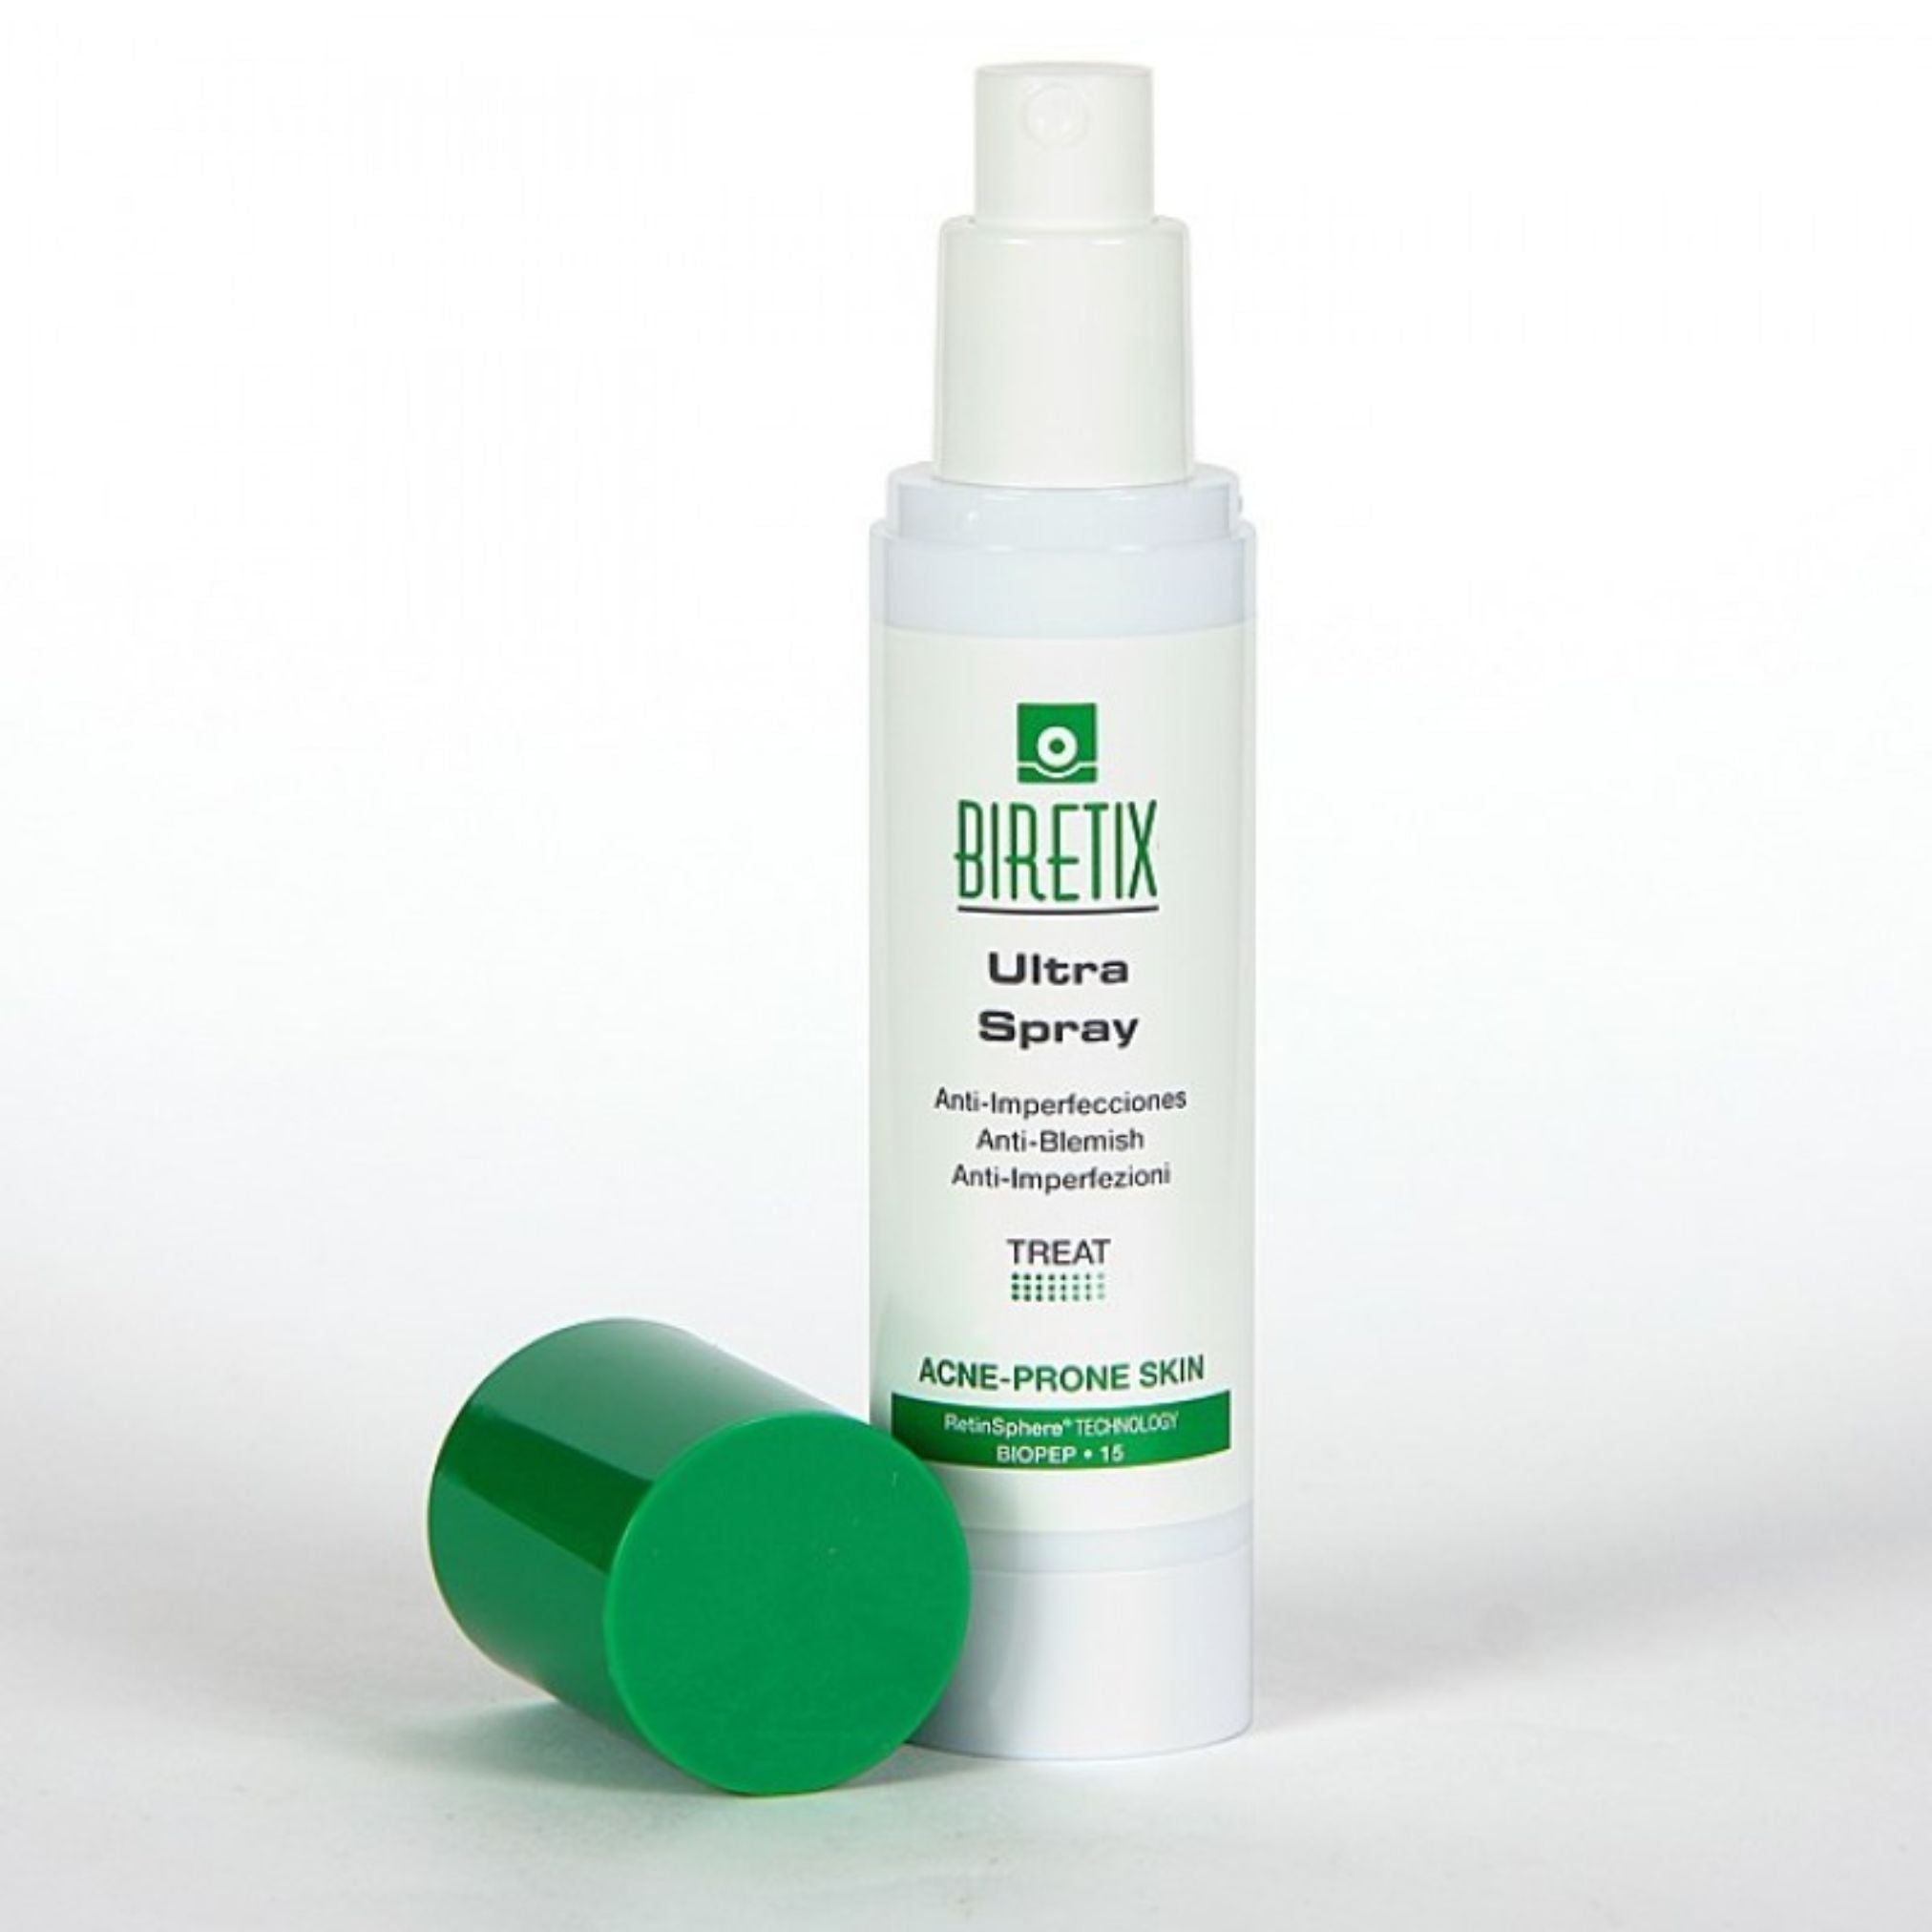 Biretix Ultra Spray 50ml